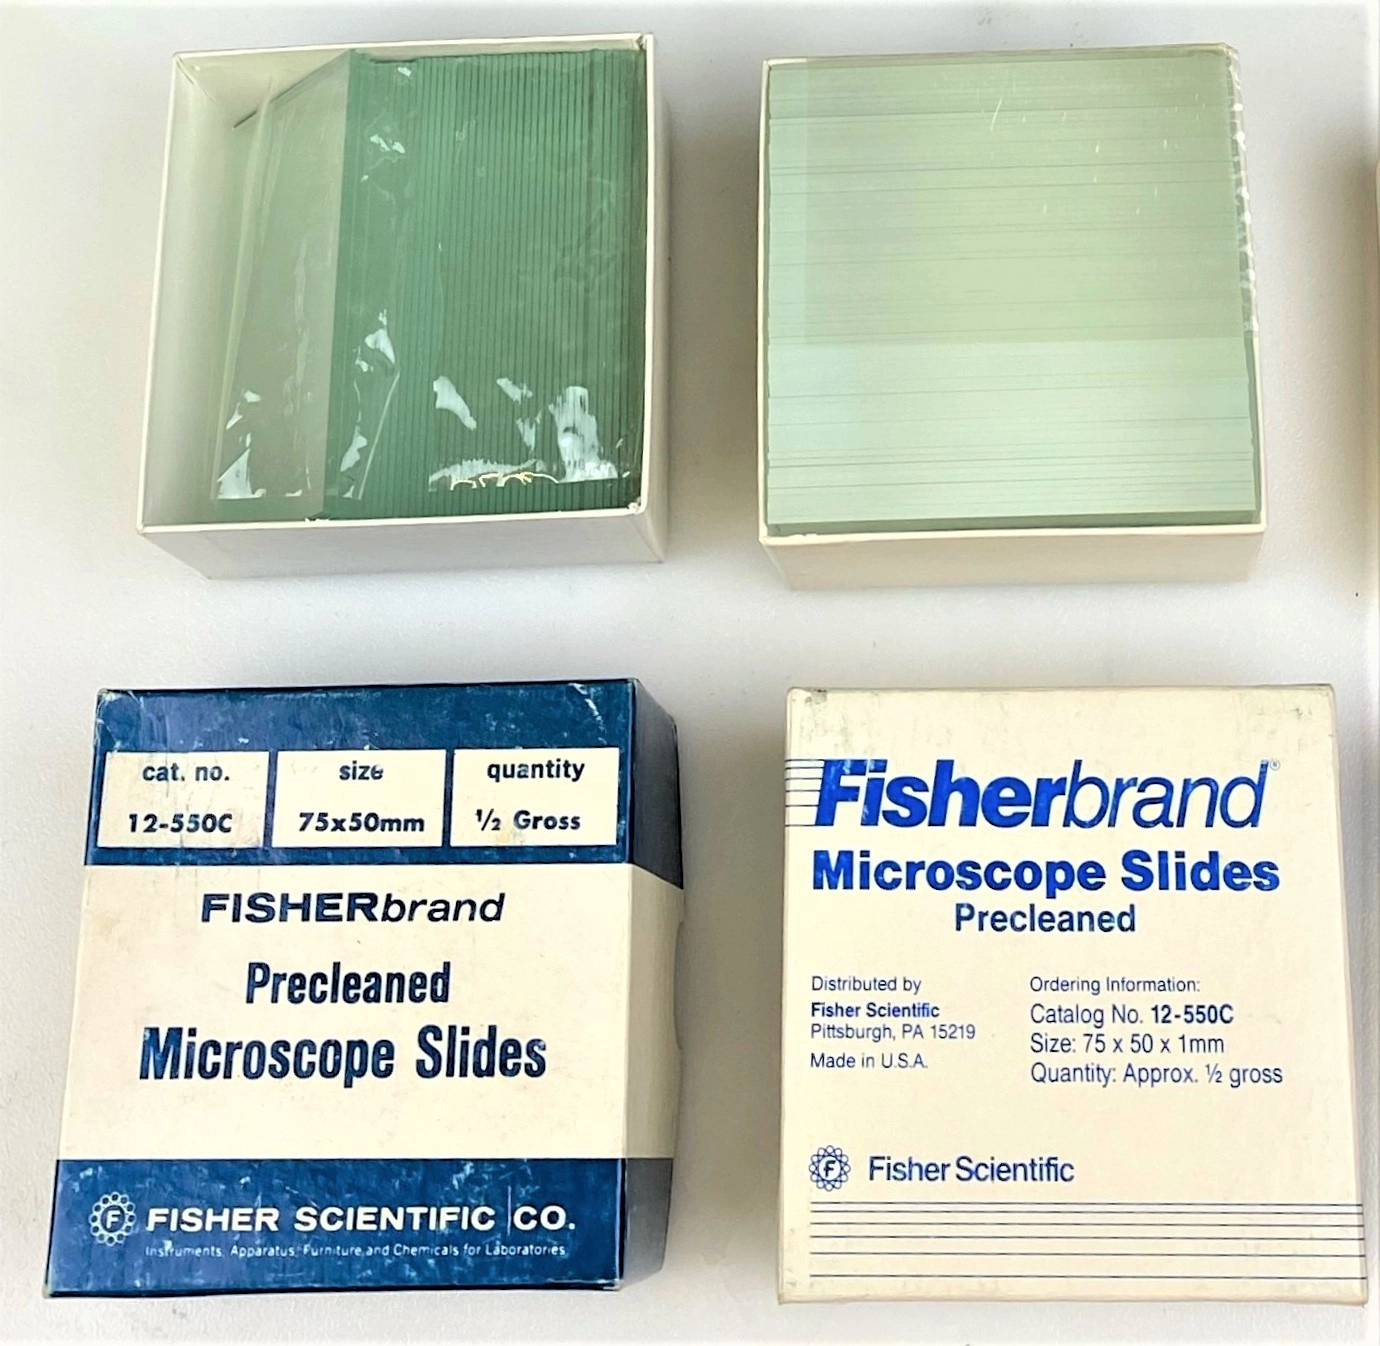 Fisherbrand 12-550C Microscope Slides - 75mm x 50mm x 1mm